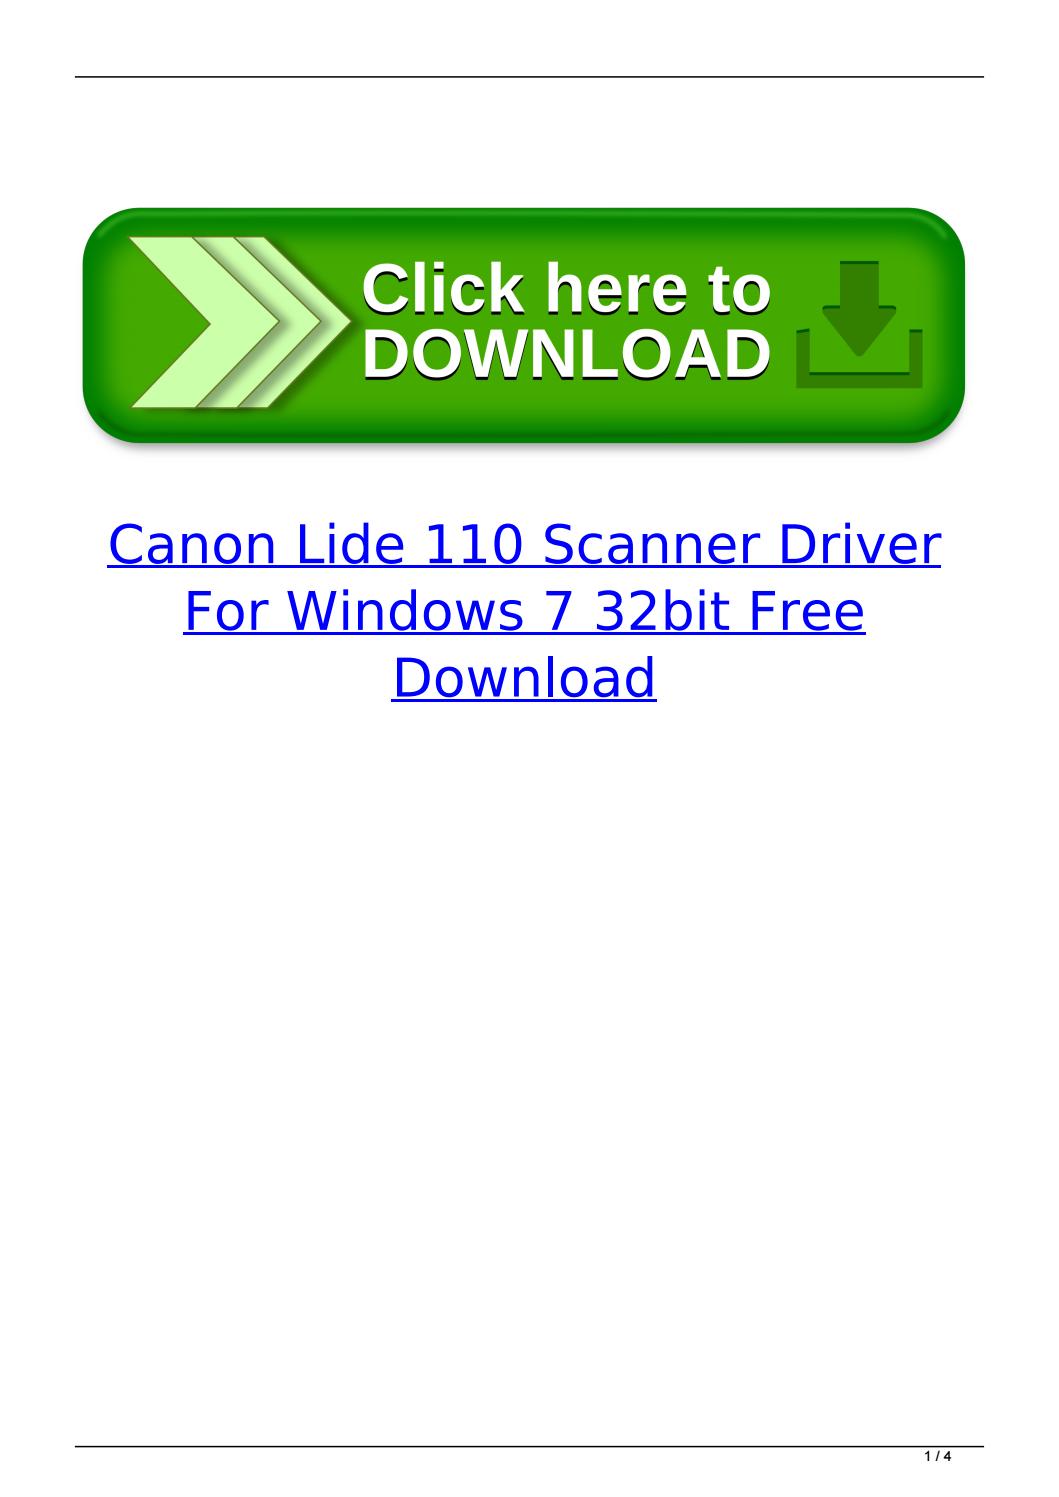 instalar scanner canon lide 110